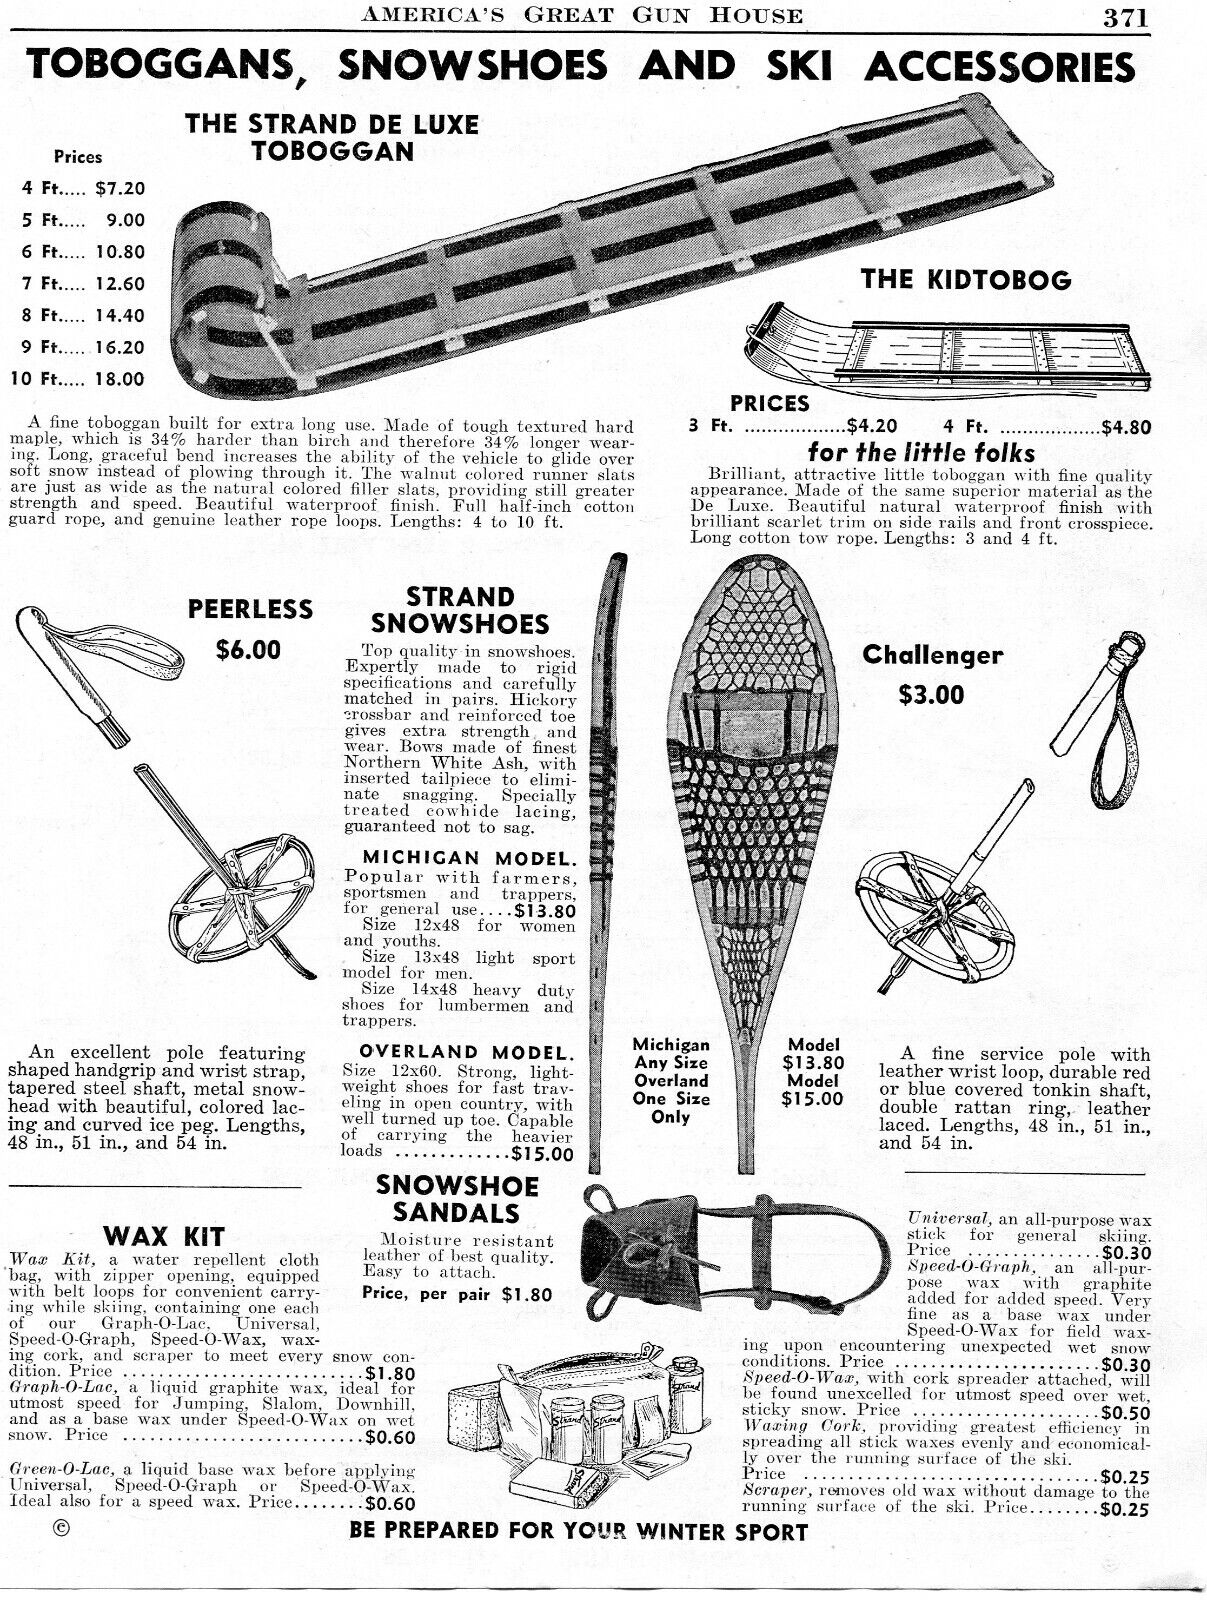 1943 Print Ad of Toboggans, Snowshoes & Snow Ski Poles